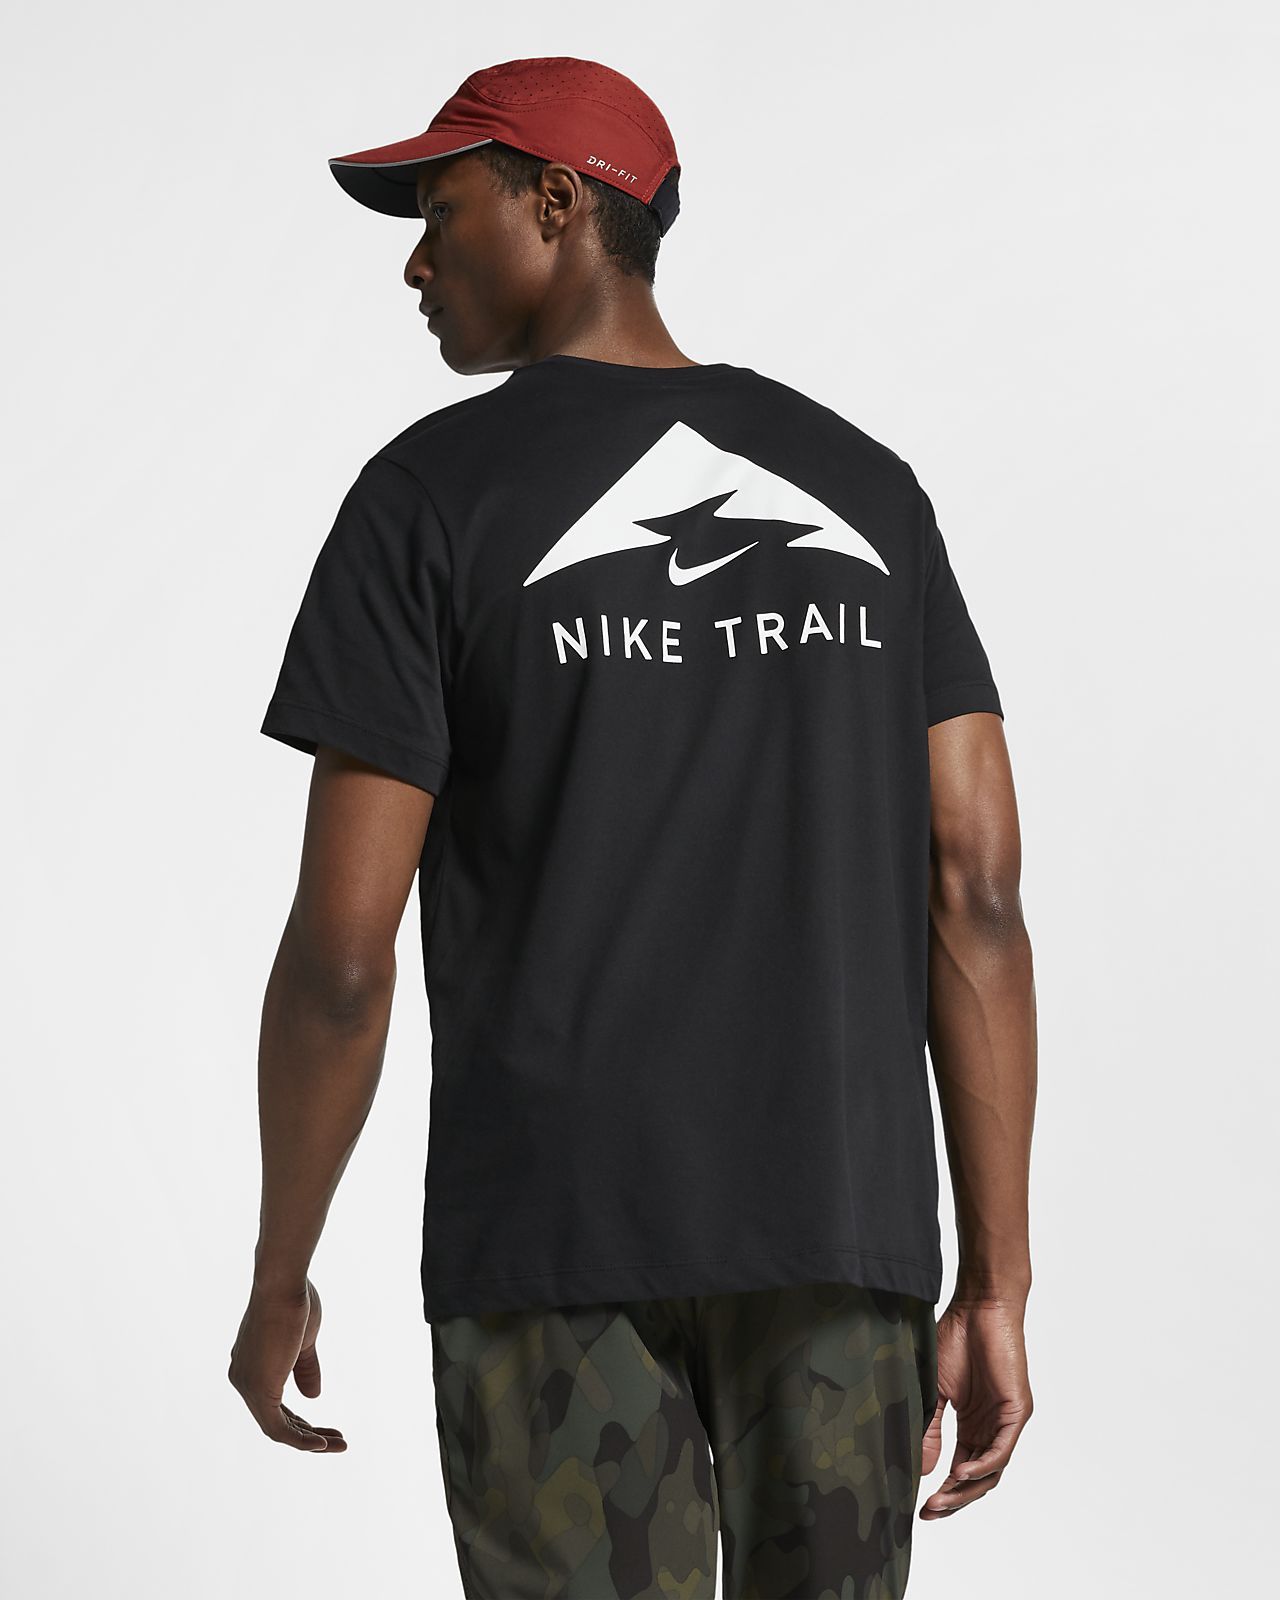 nike trail clothes